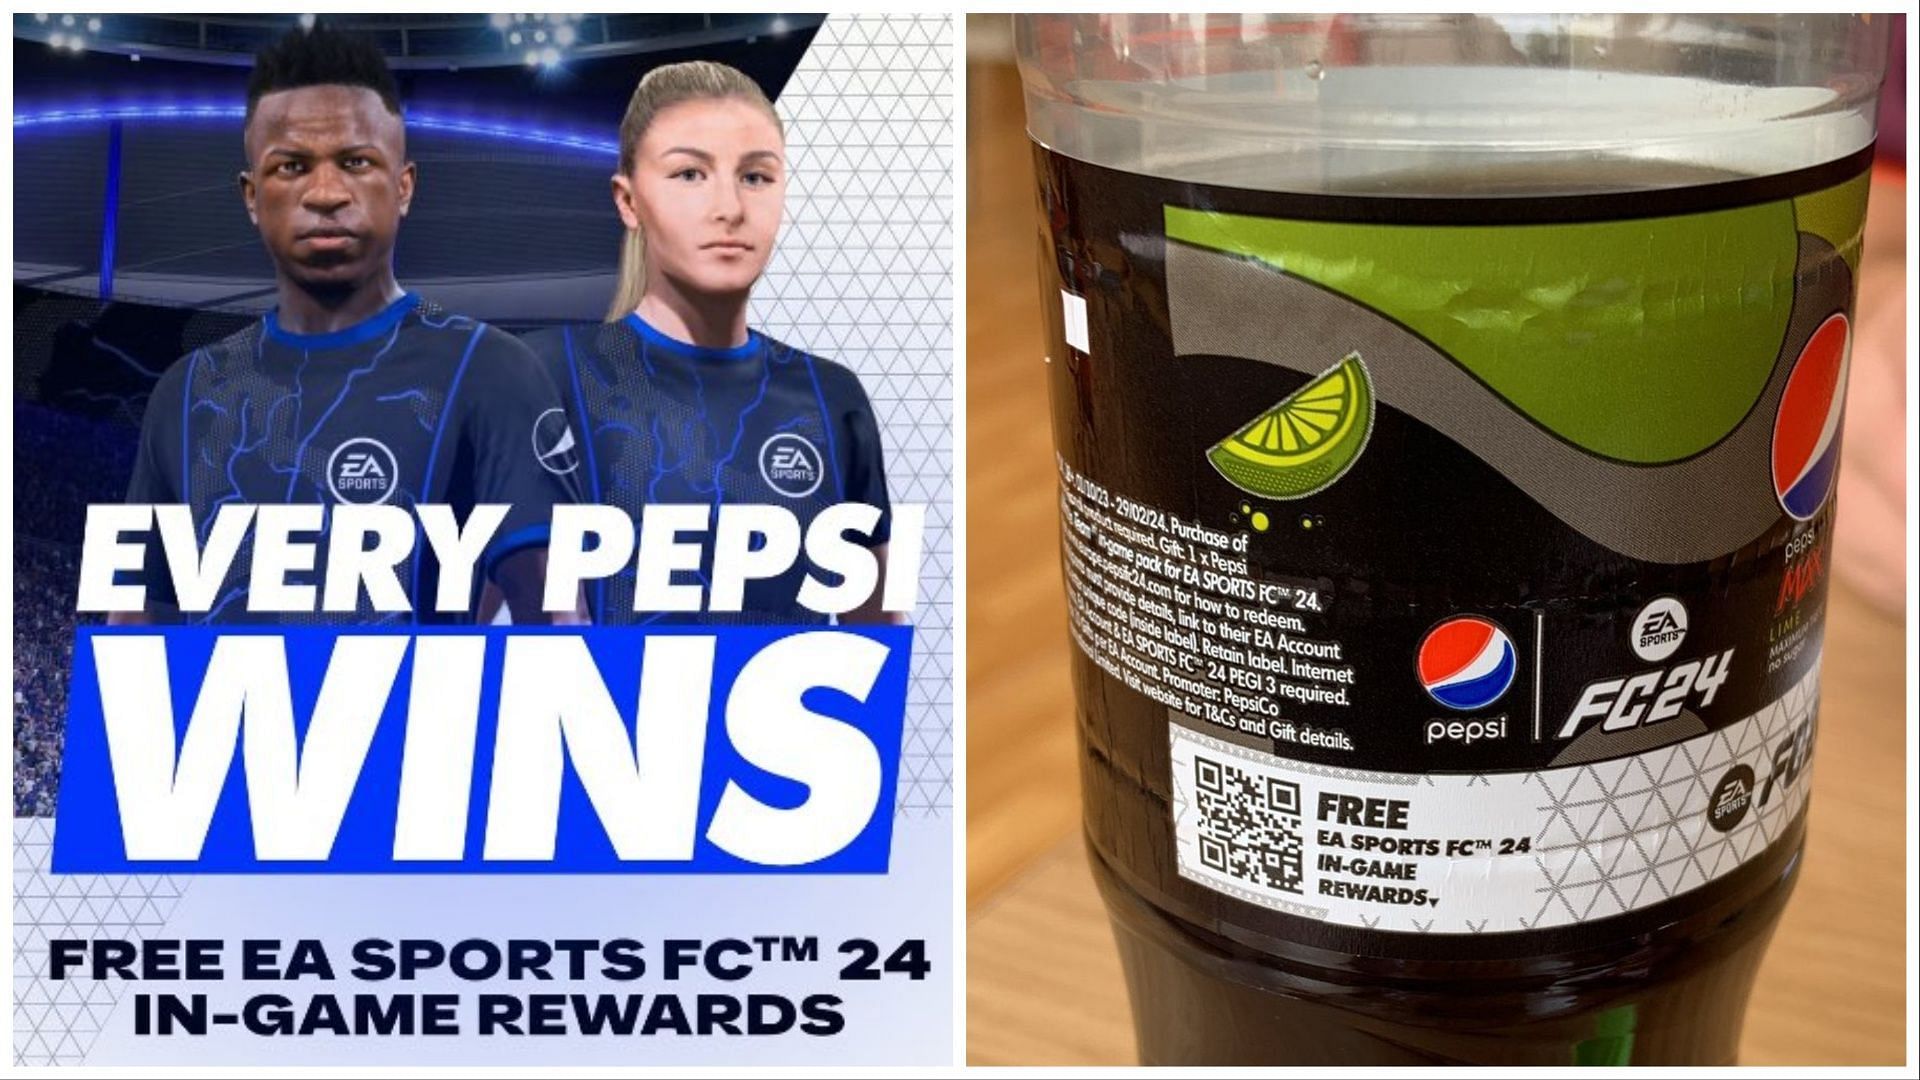 New leak hints at rumored EA FC 24 Pepsi promo providing free packs in